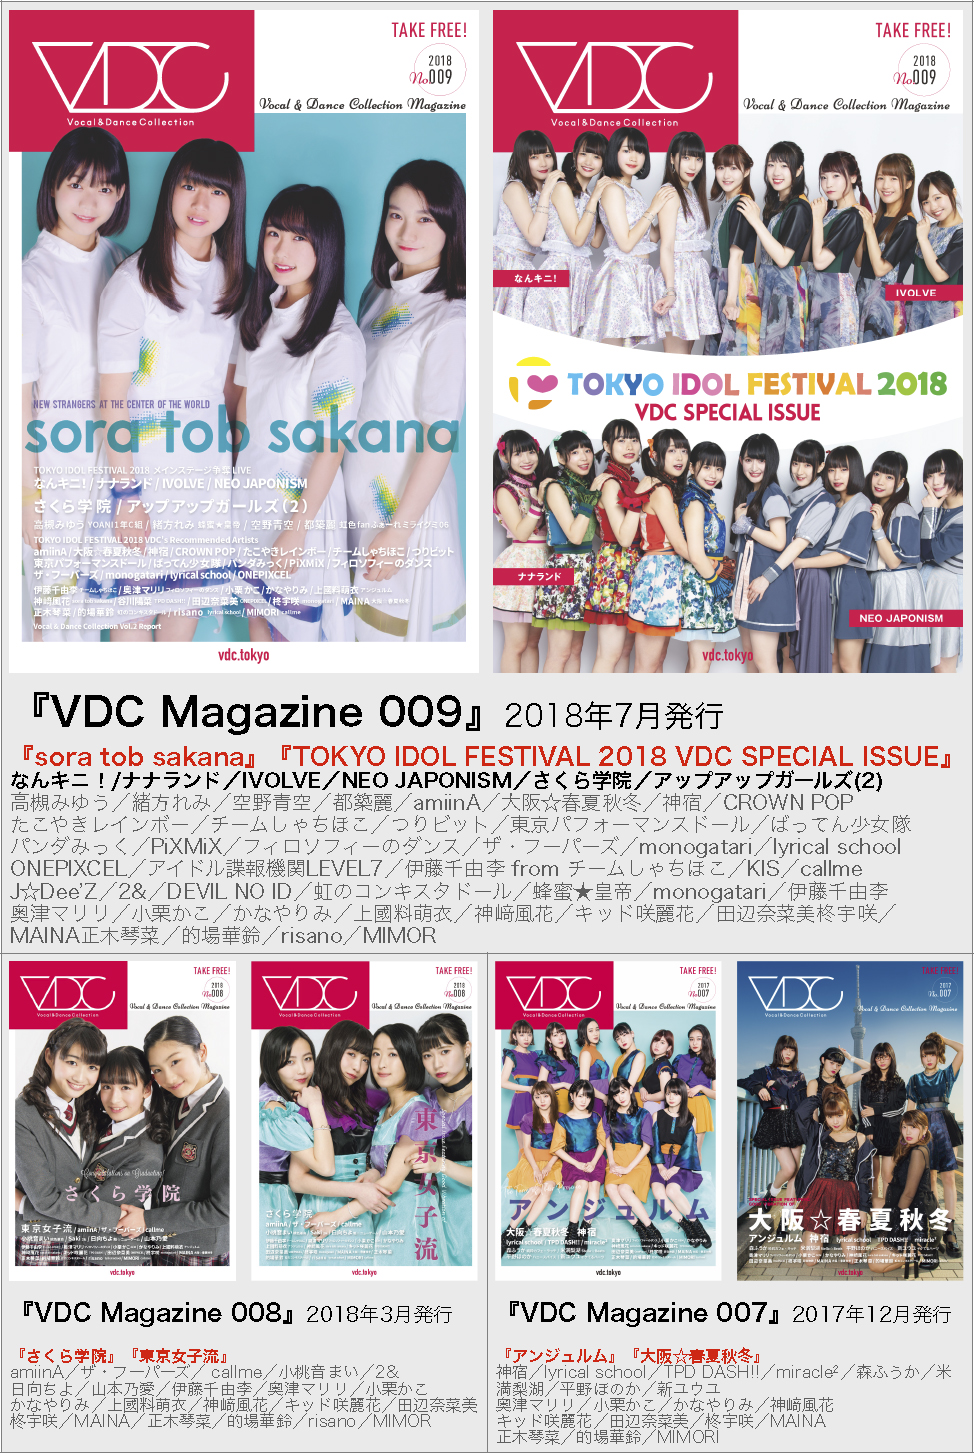 VDC Magazine